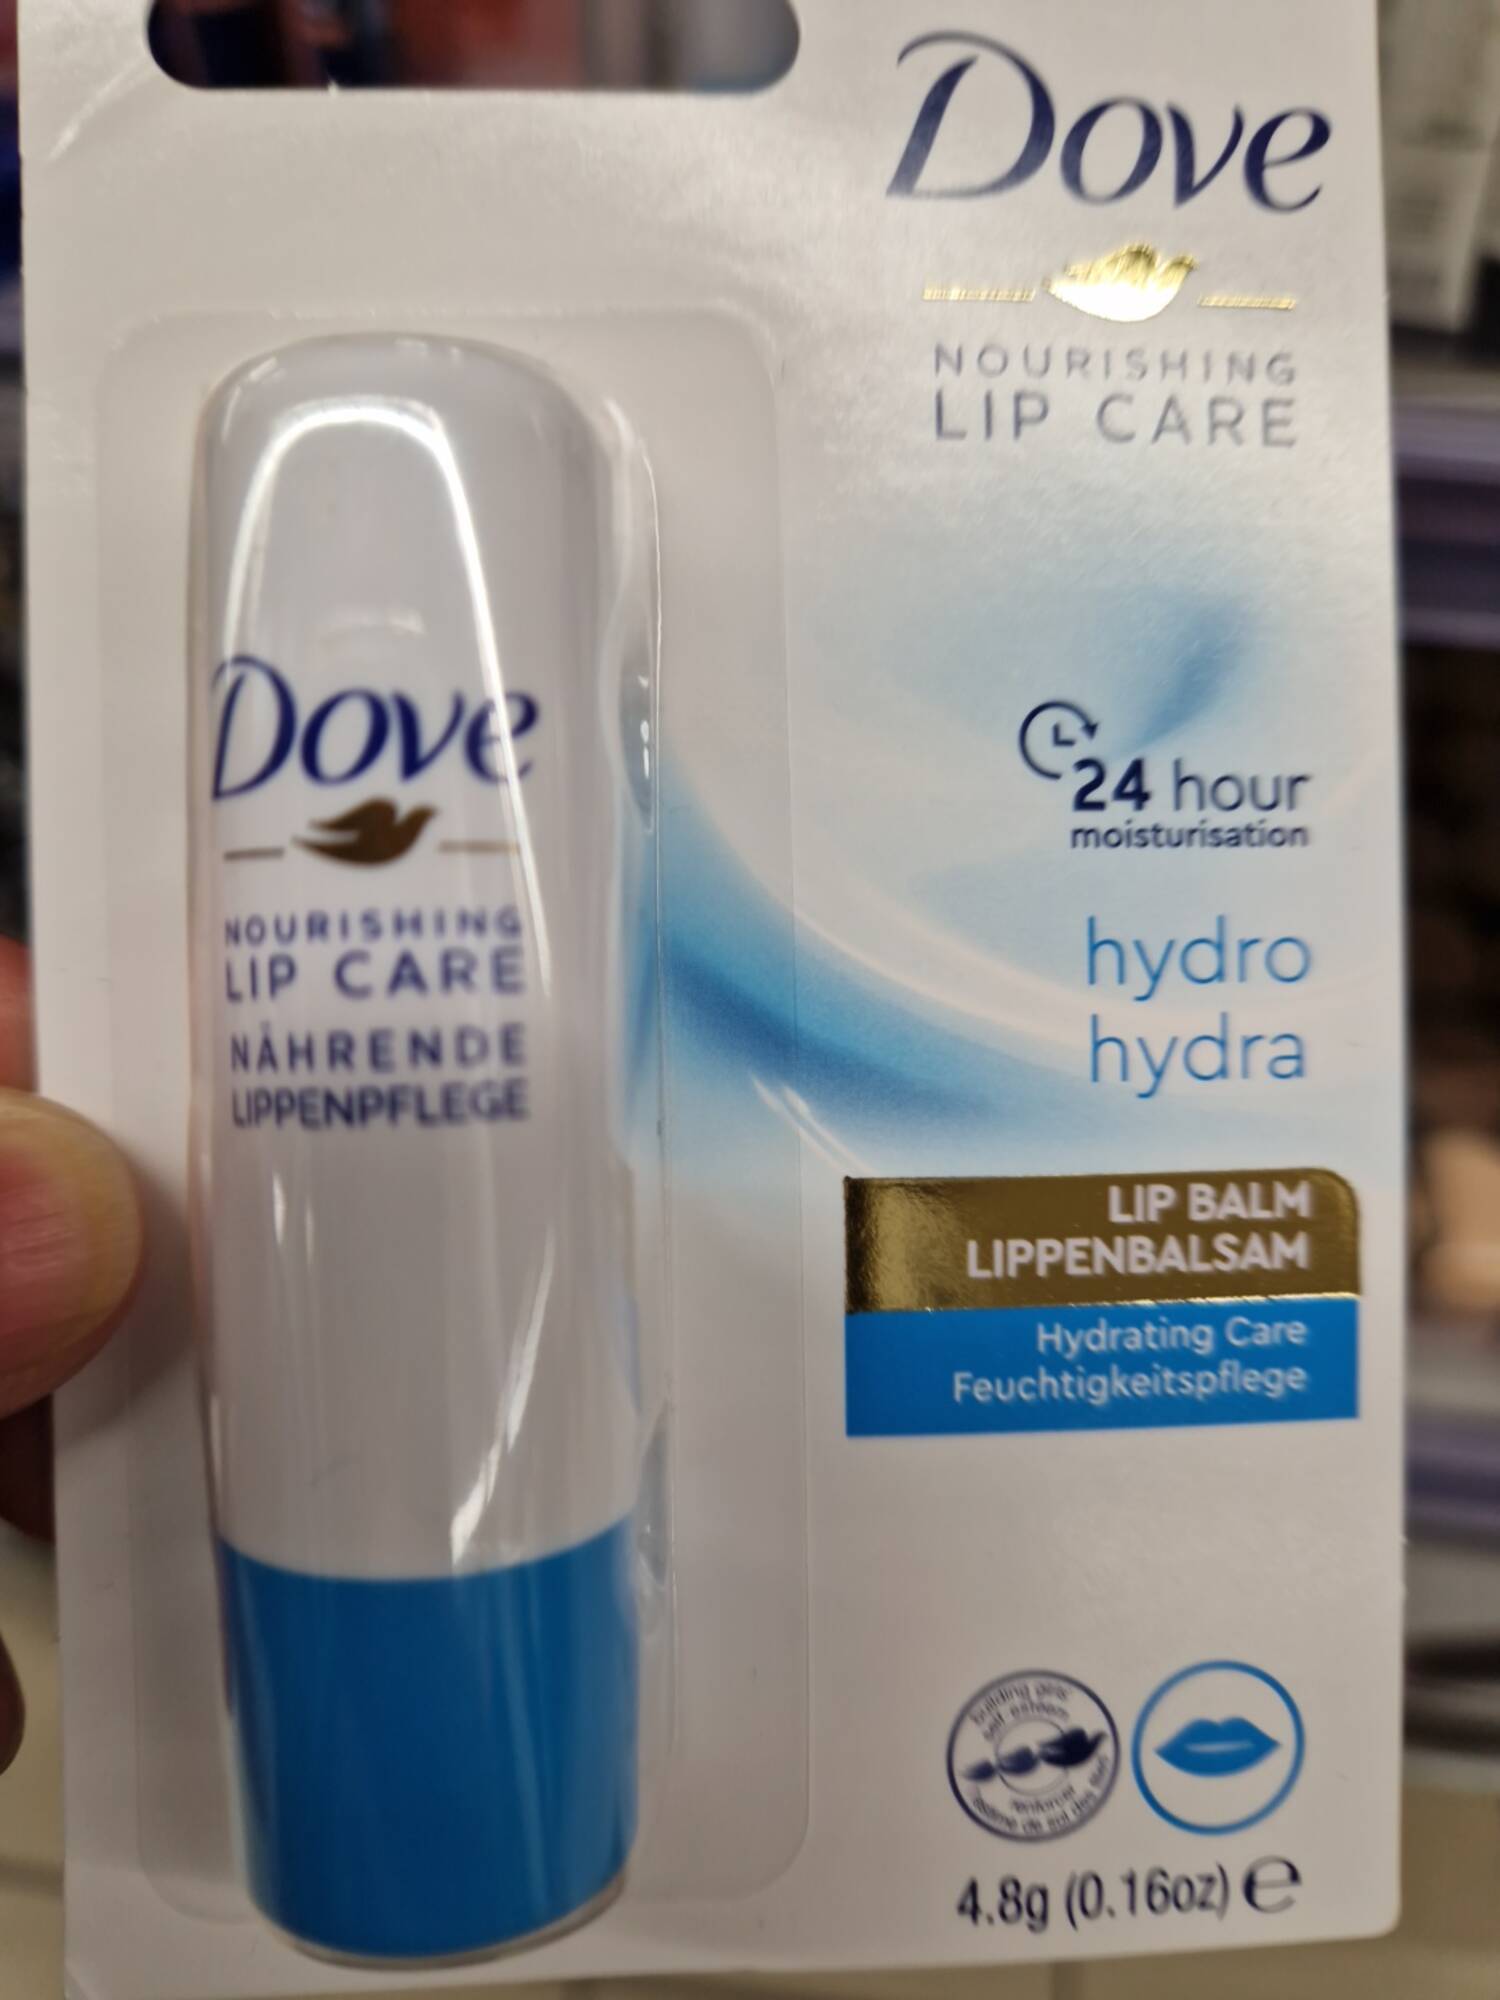 DOVE - Nourishing lip care